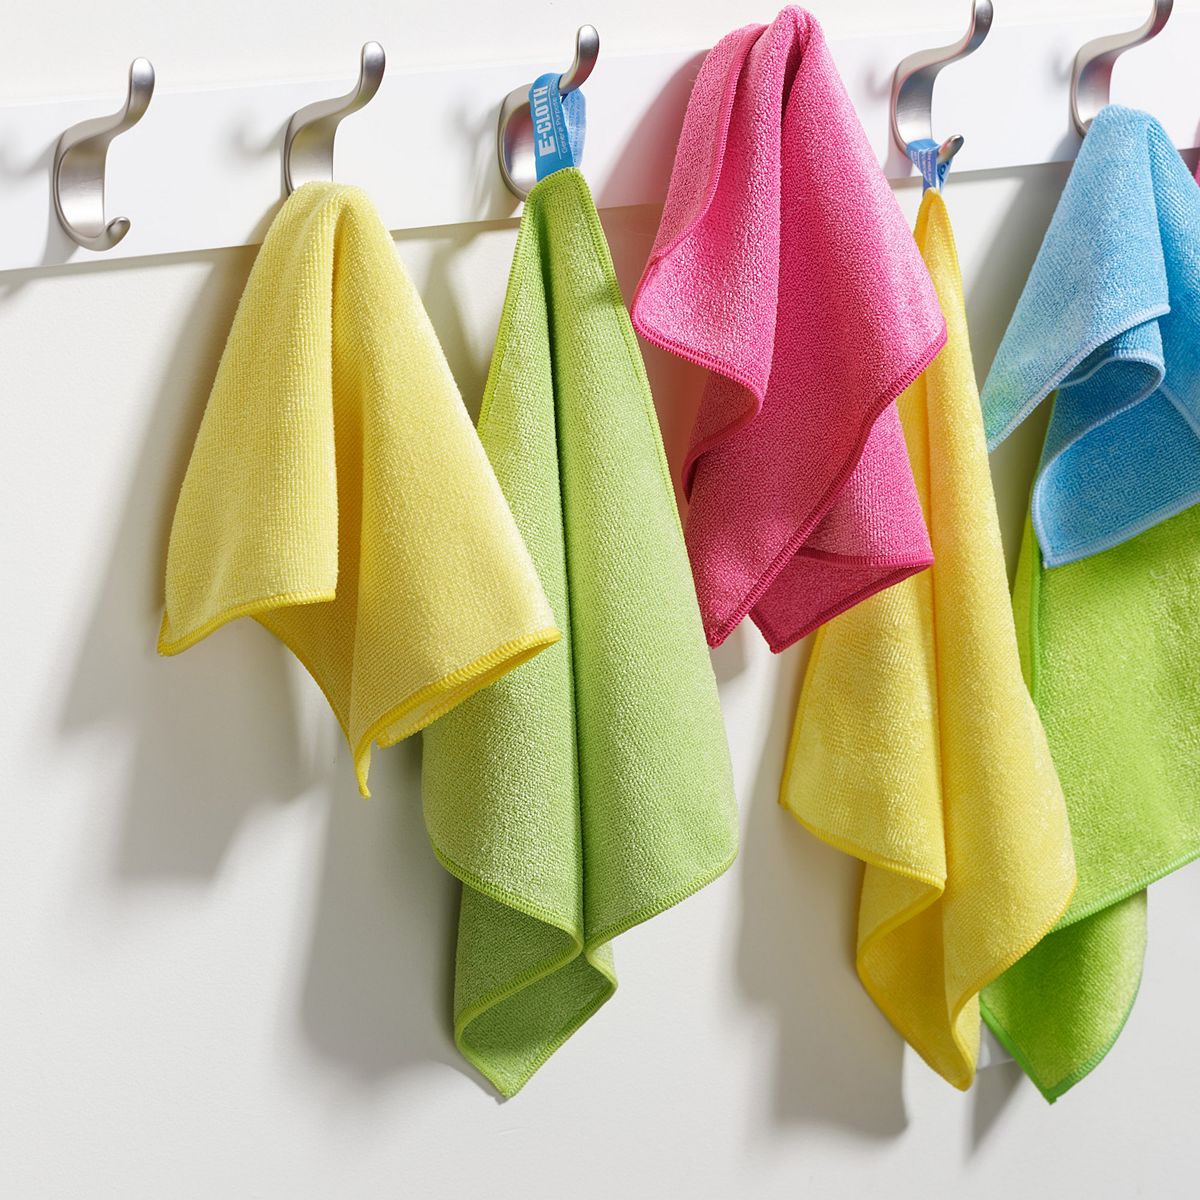 LIVAIA Microfiber Cleaning Cloth: 2 Microfiber Cleaning Cloths for Cars –  Car Wash Cloths for Cleaning, Car Cleaning Products, Car Wash Kit Car Care